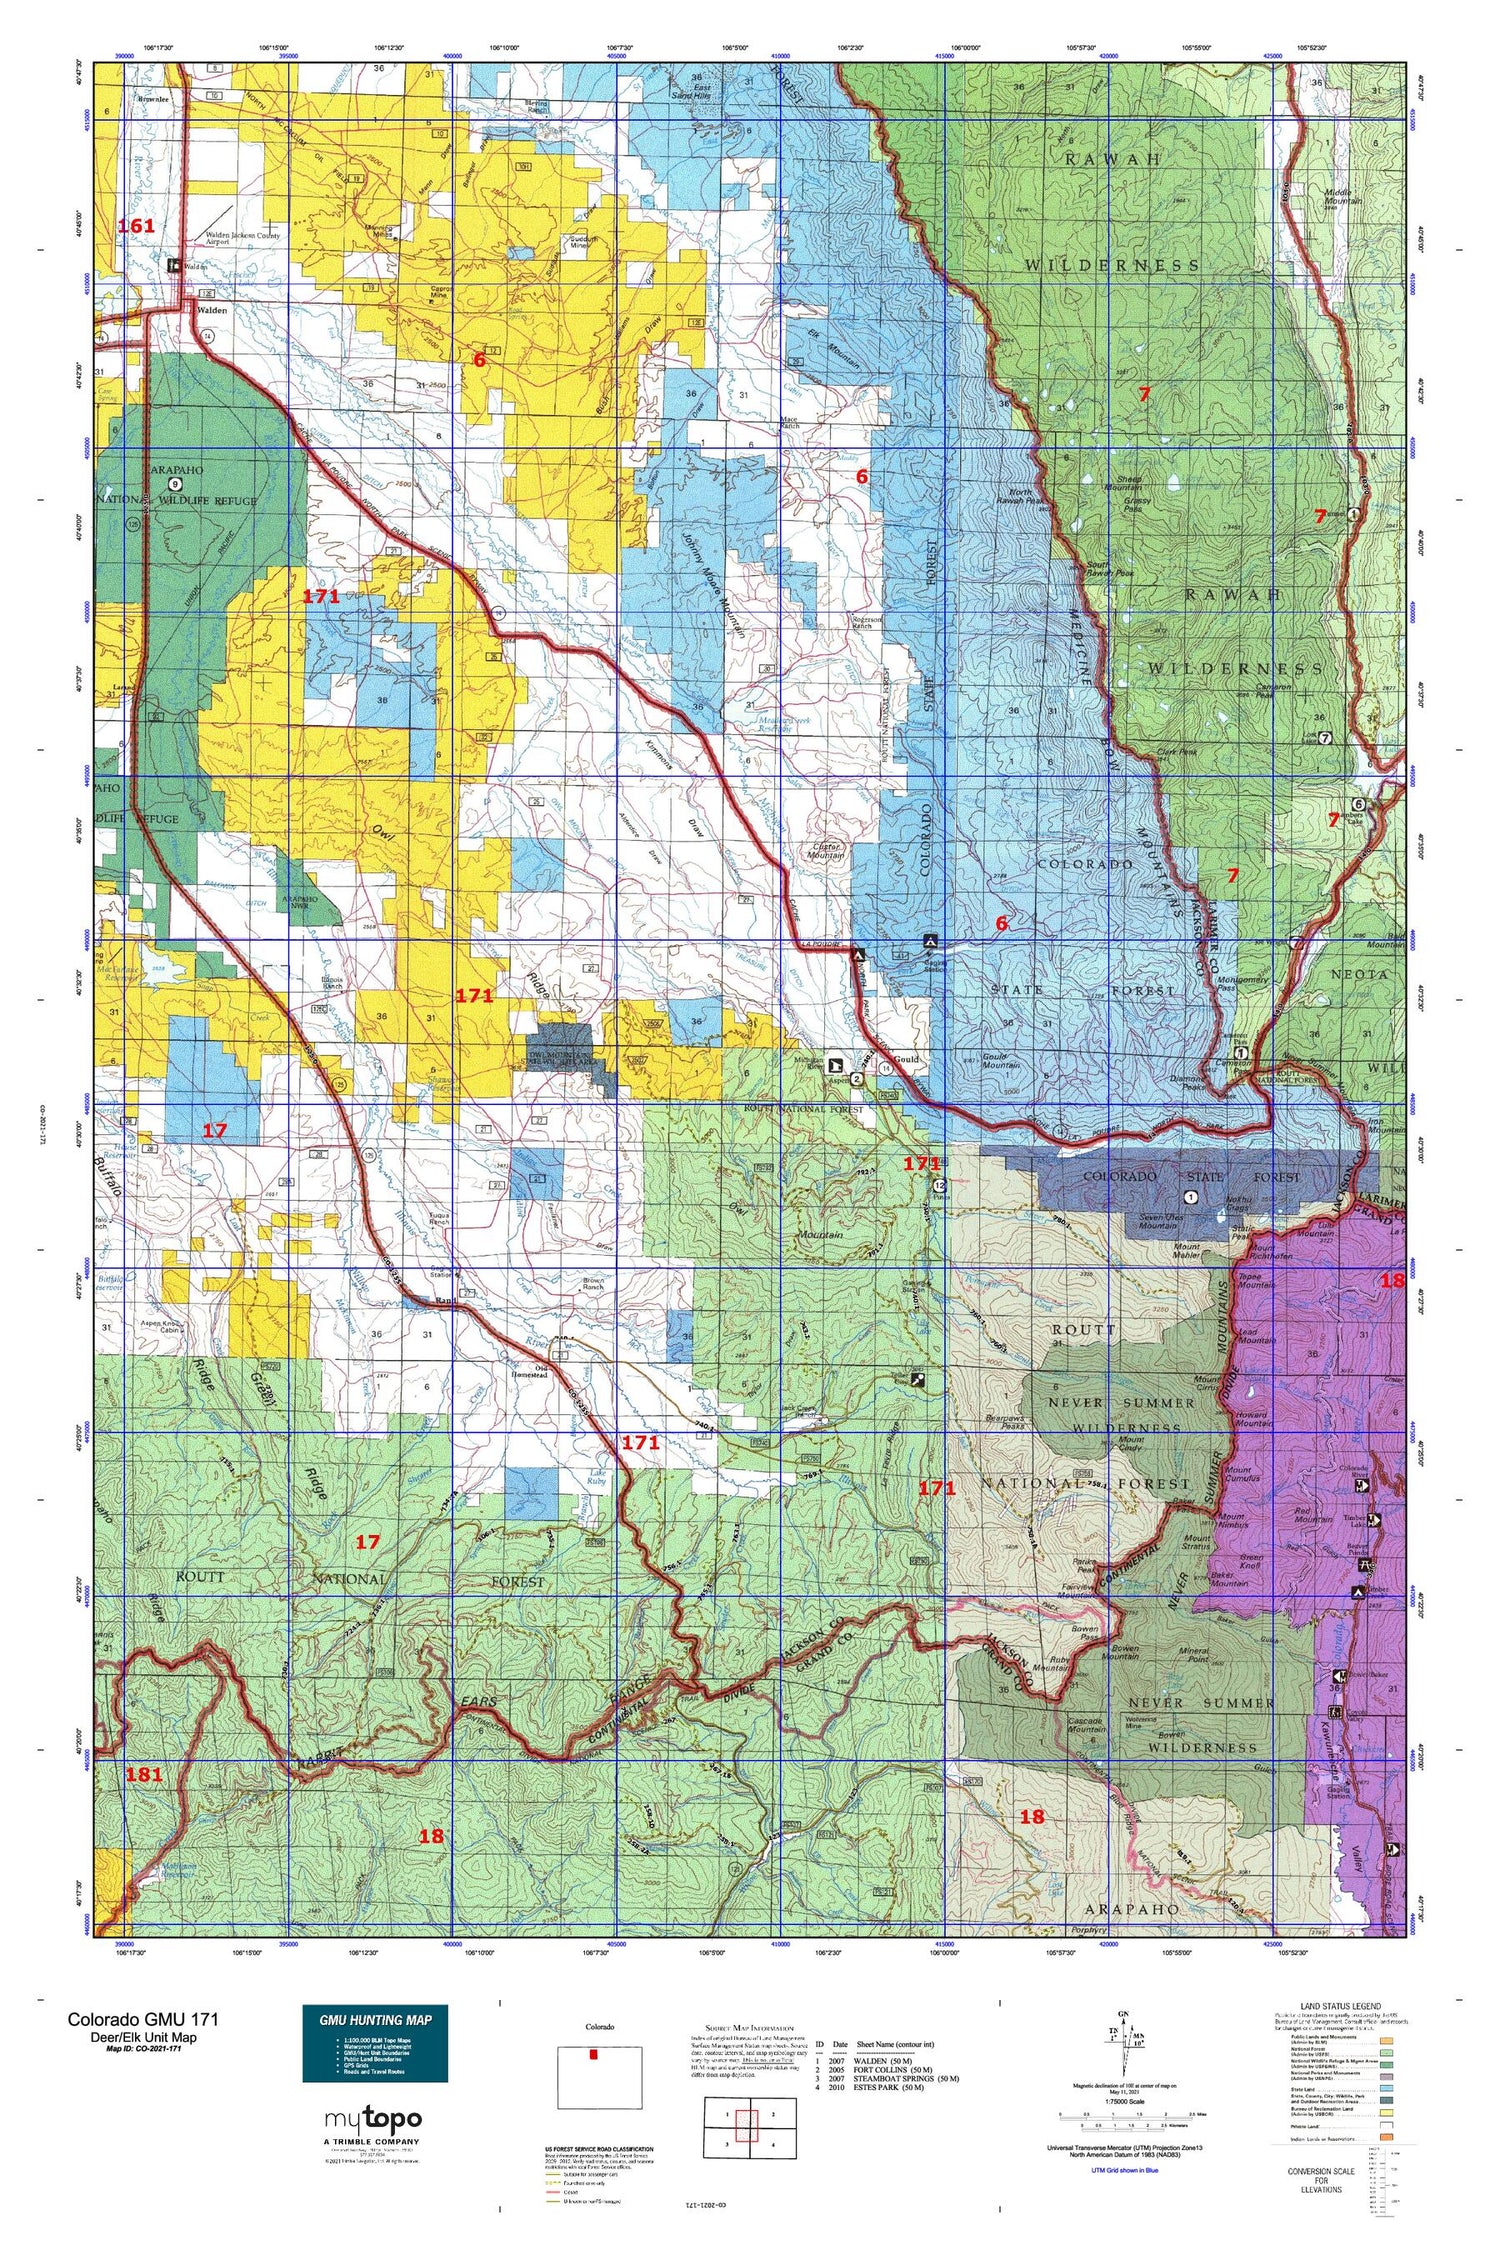 Colorado GMU 171 Map Image